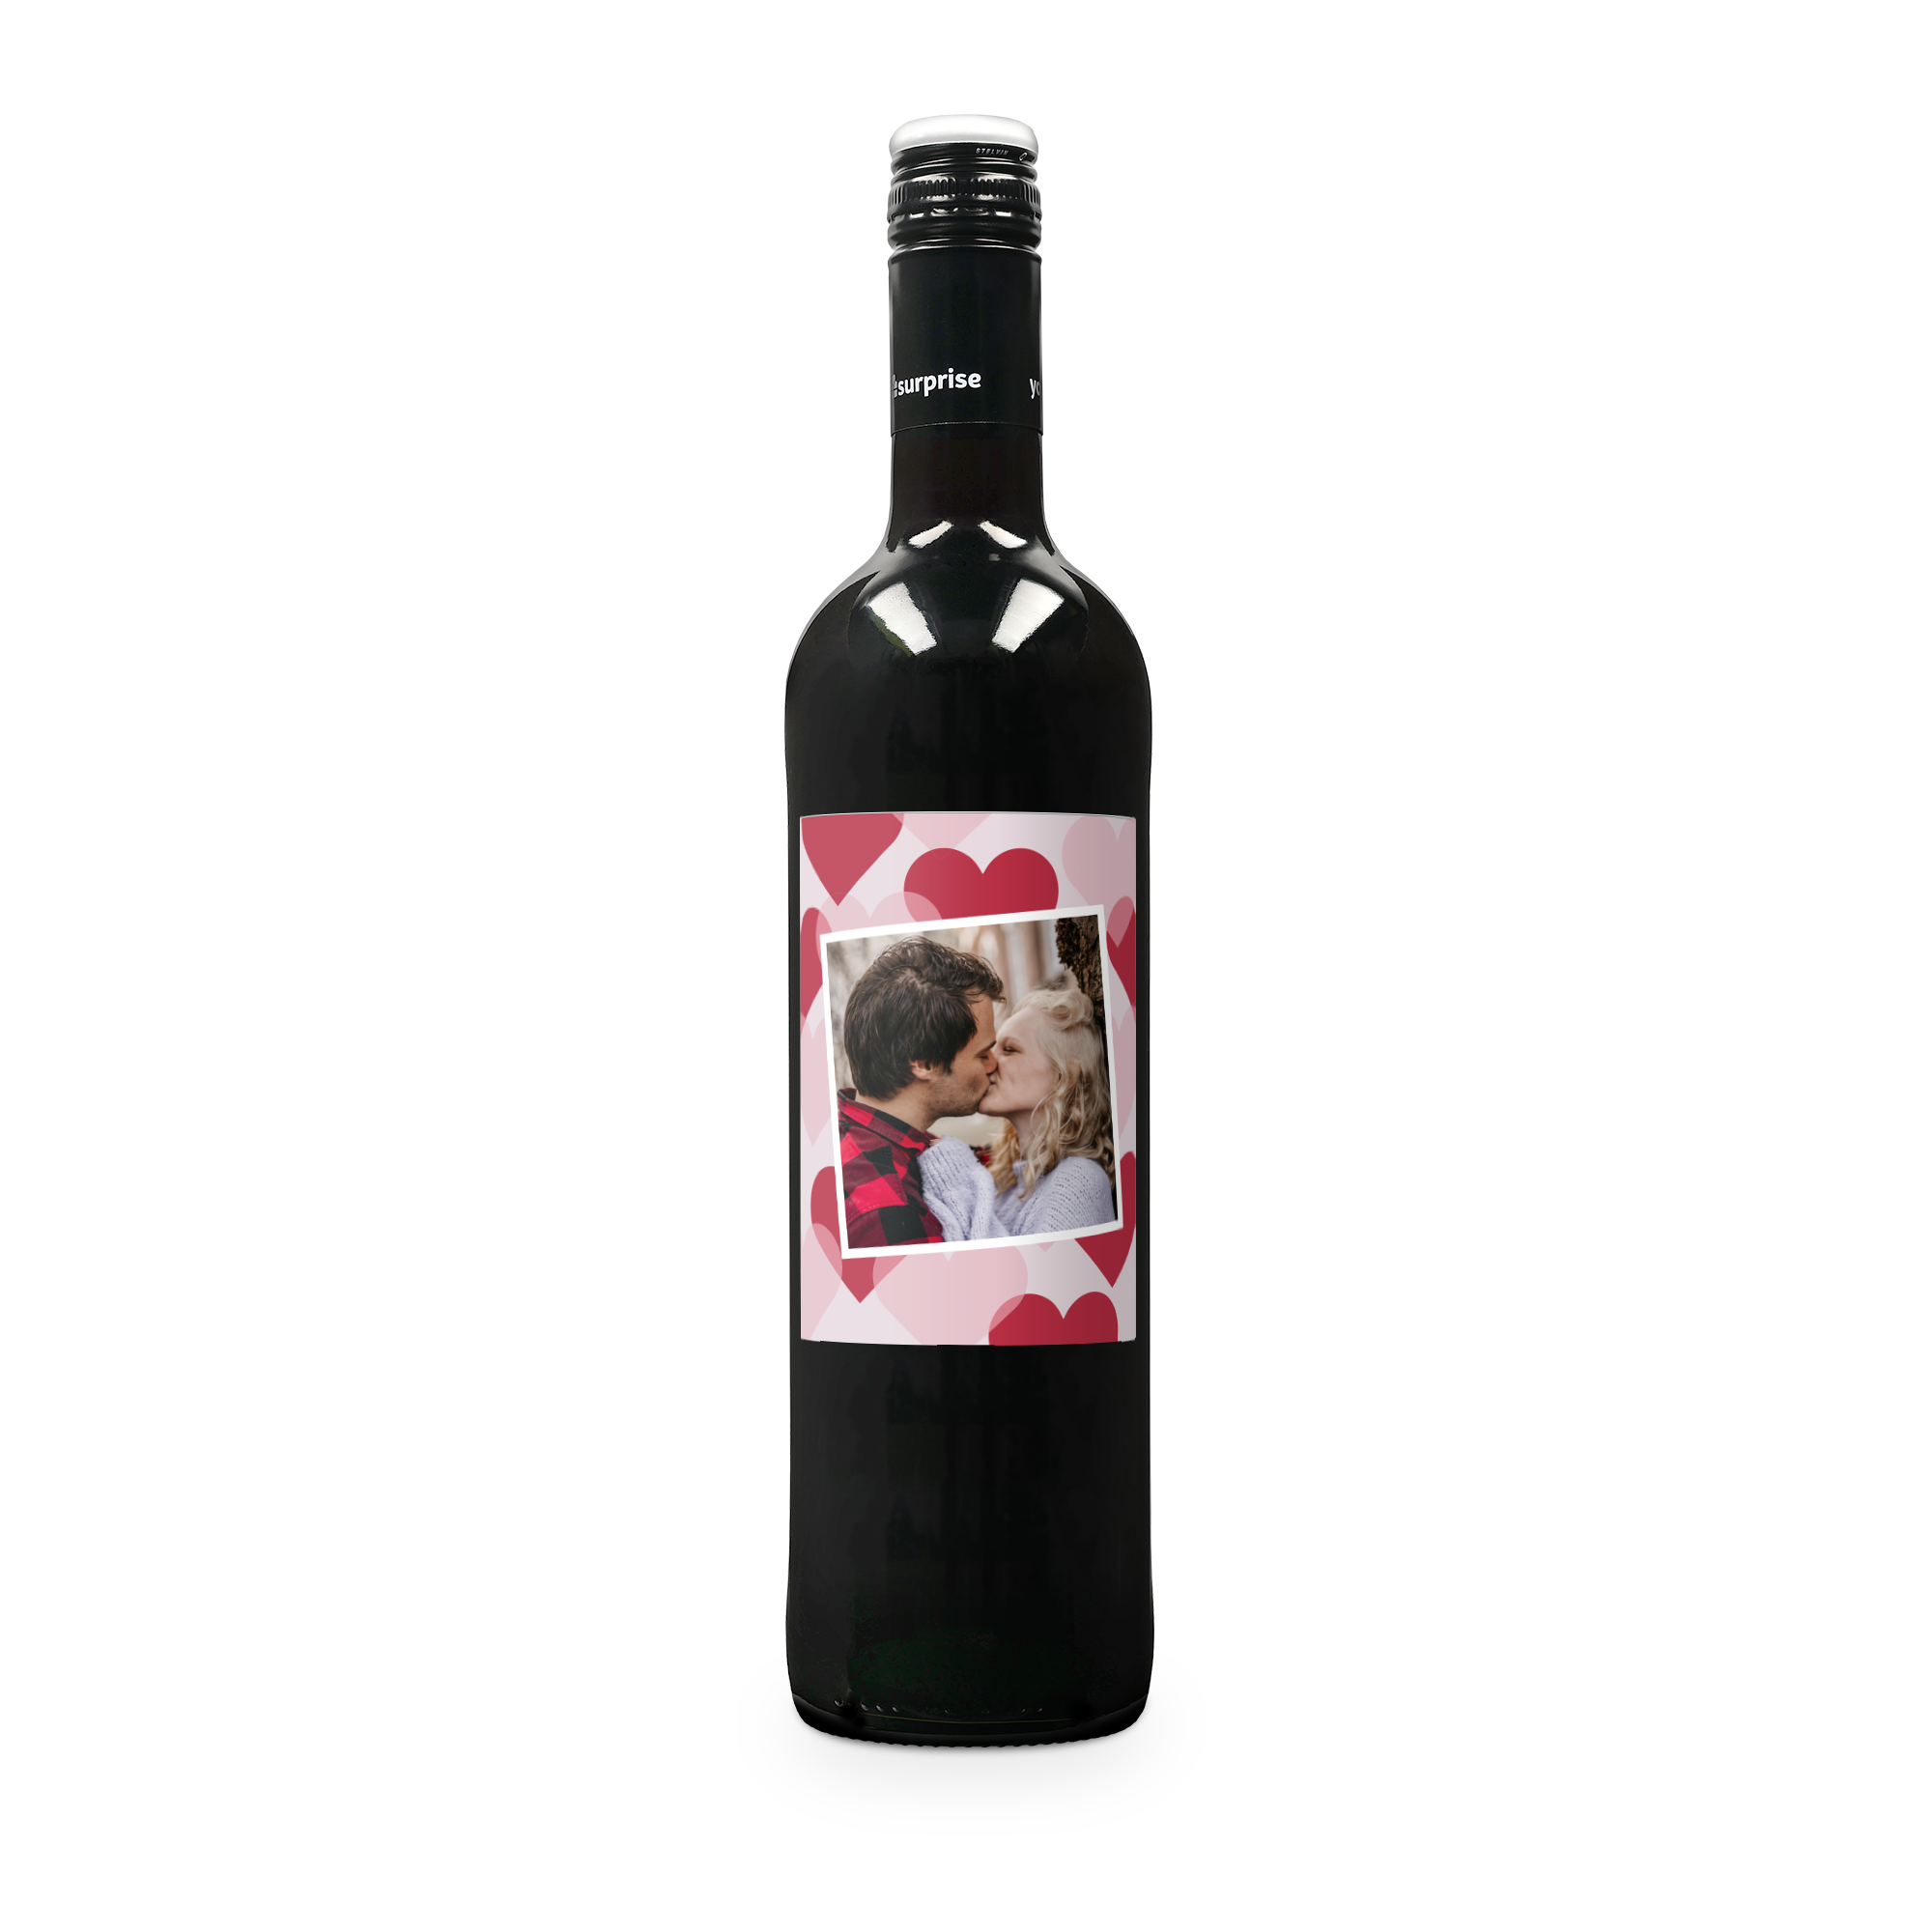 Vinho com rótulo personalizado - Maison de la Surprise - Merlot 